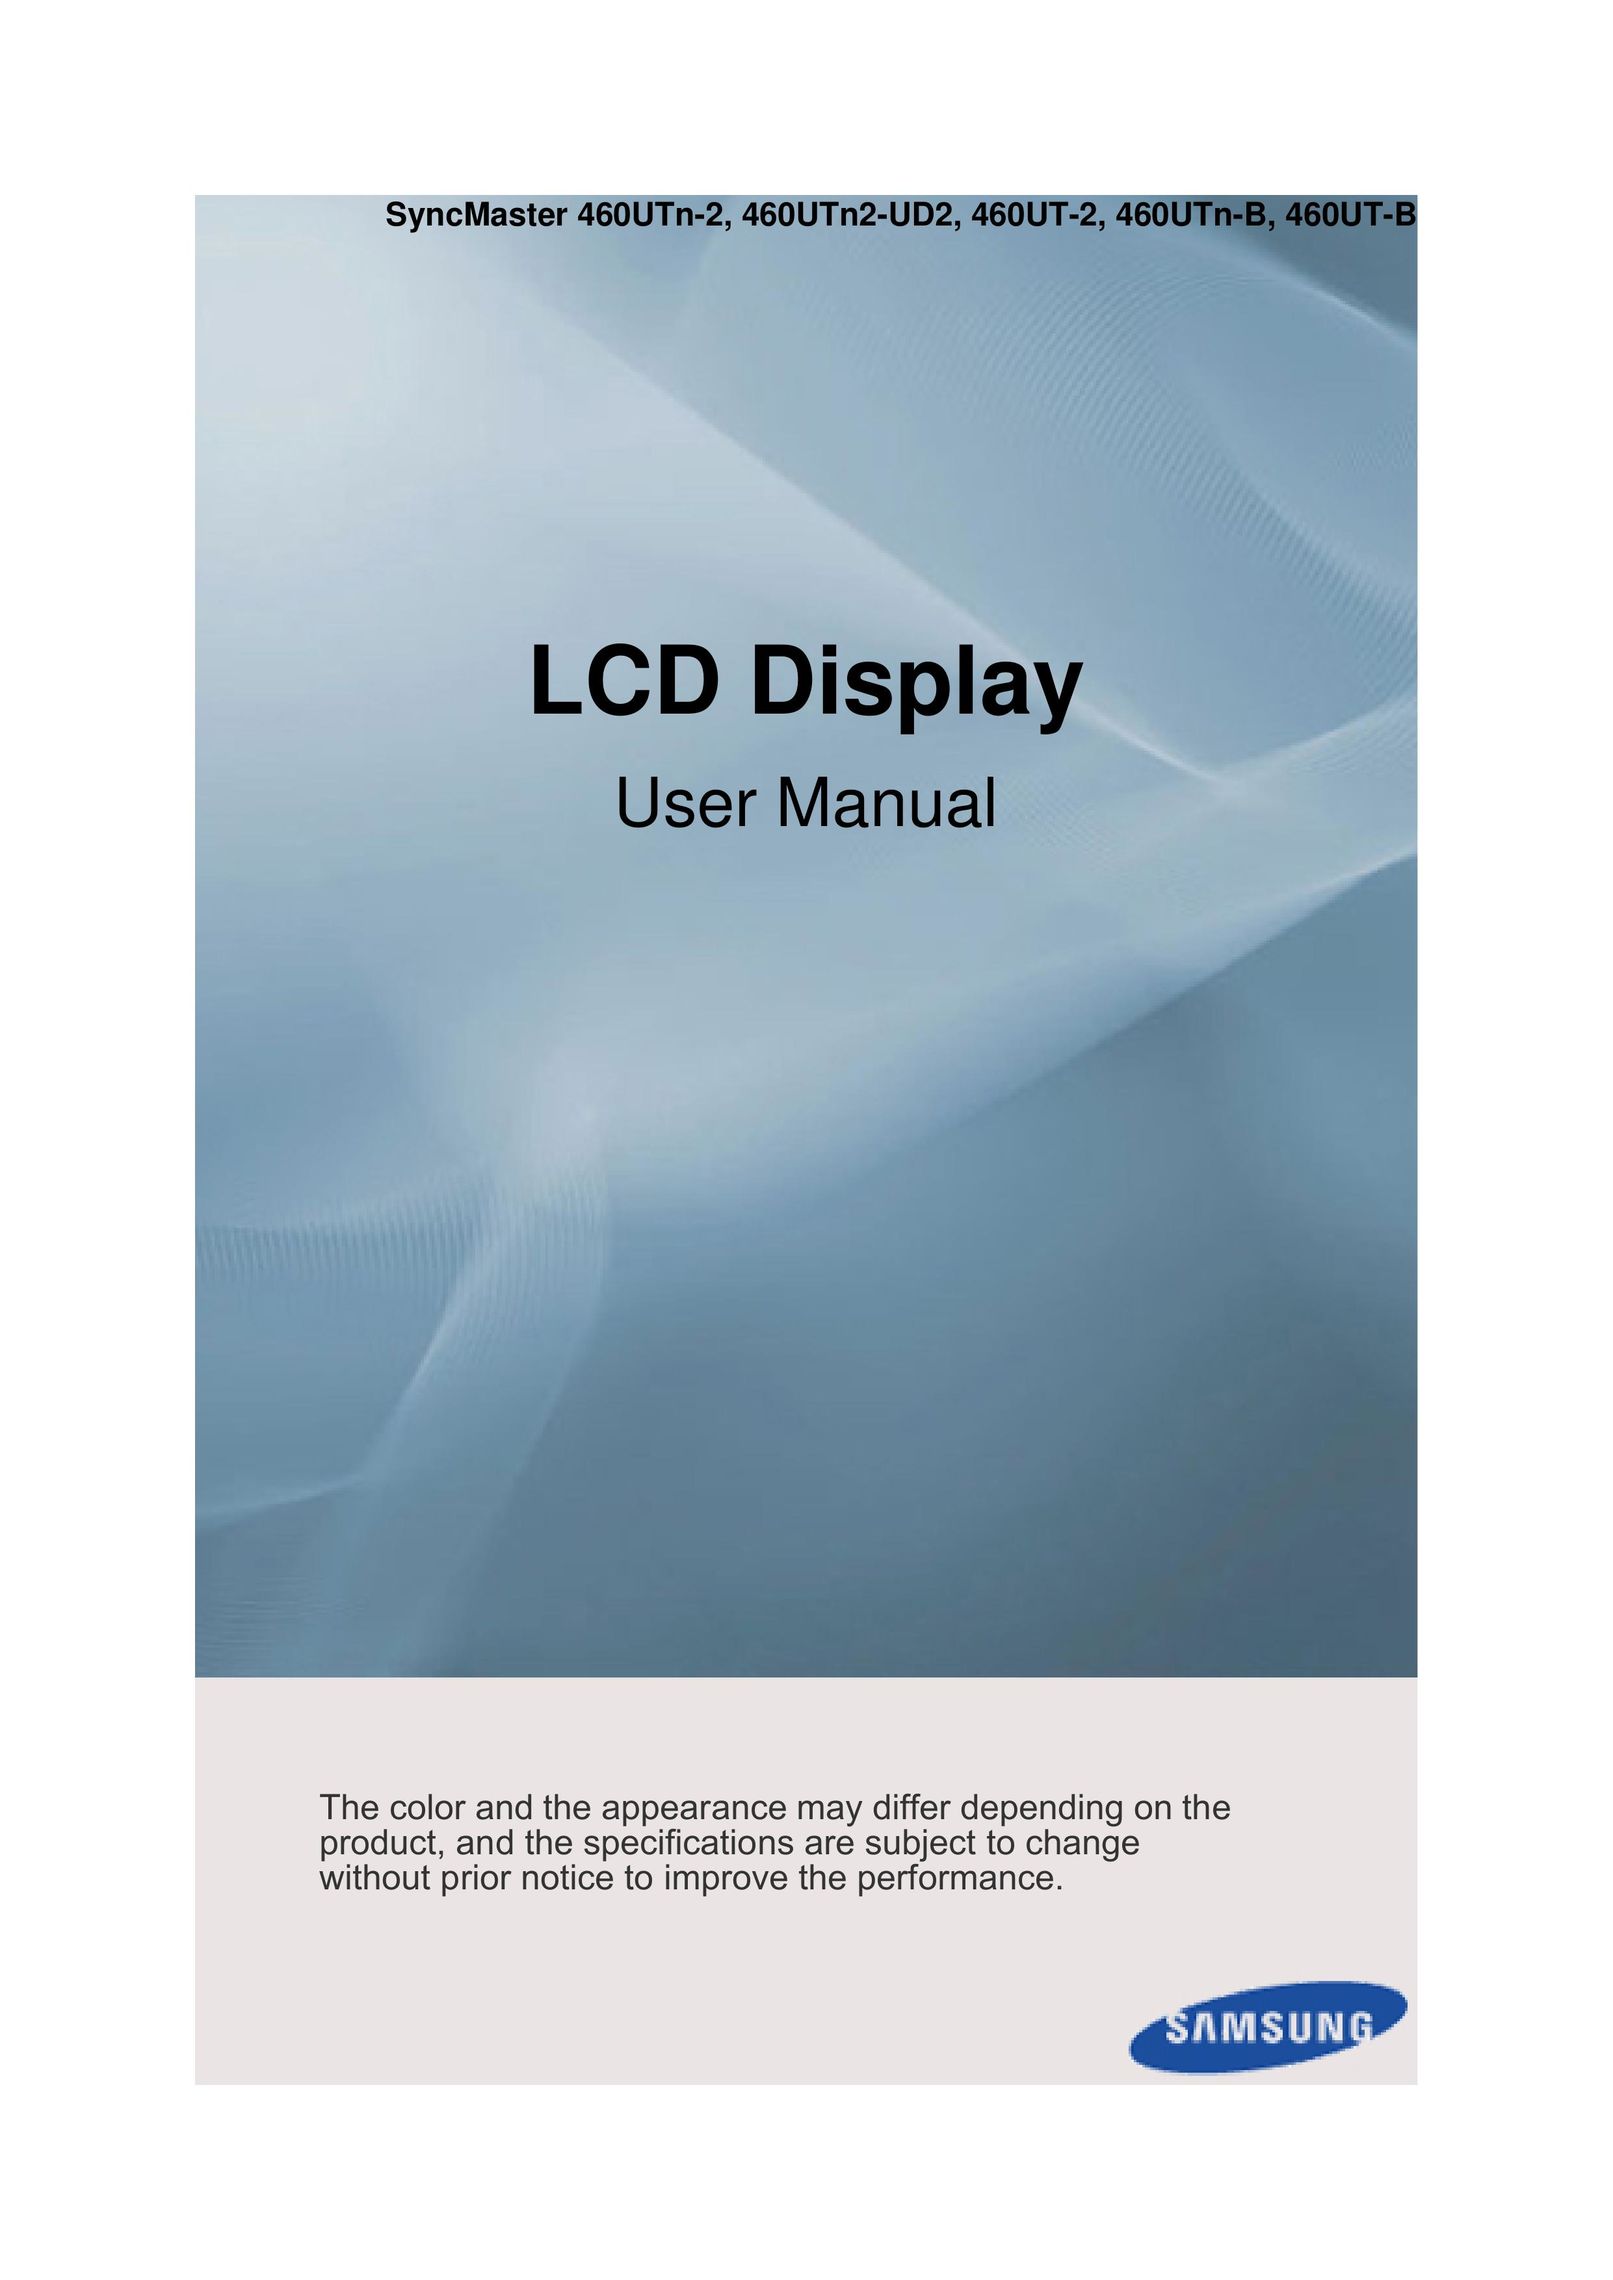 Samsung 460UTn-B Car Video System User Manual